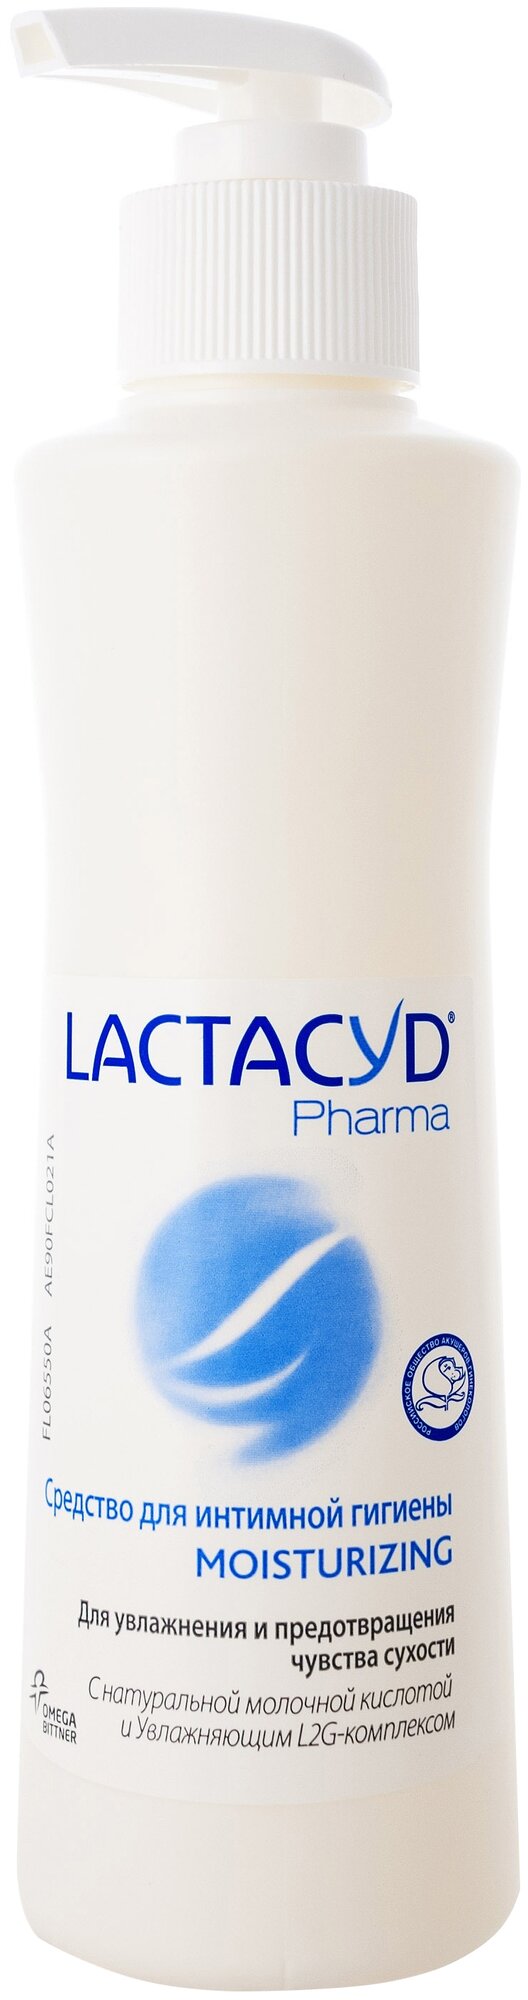 Lactacyd средство для интимной гигиены Pharma Moisturizing